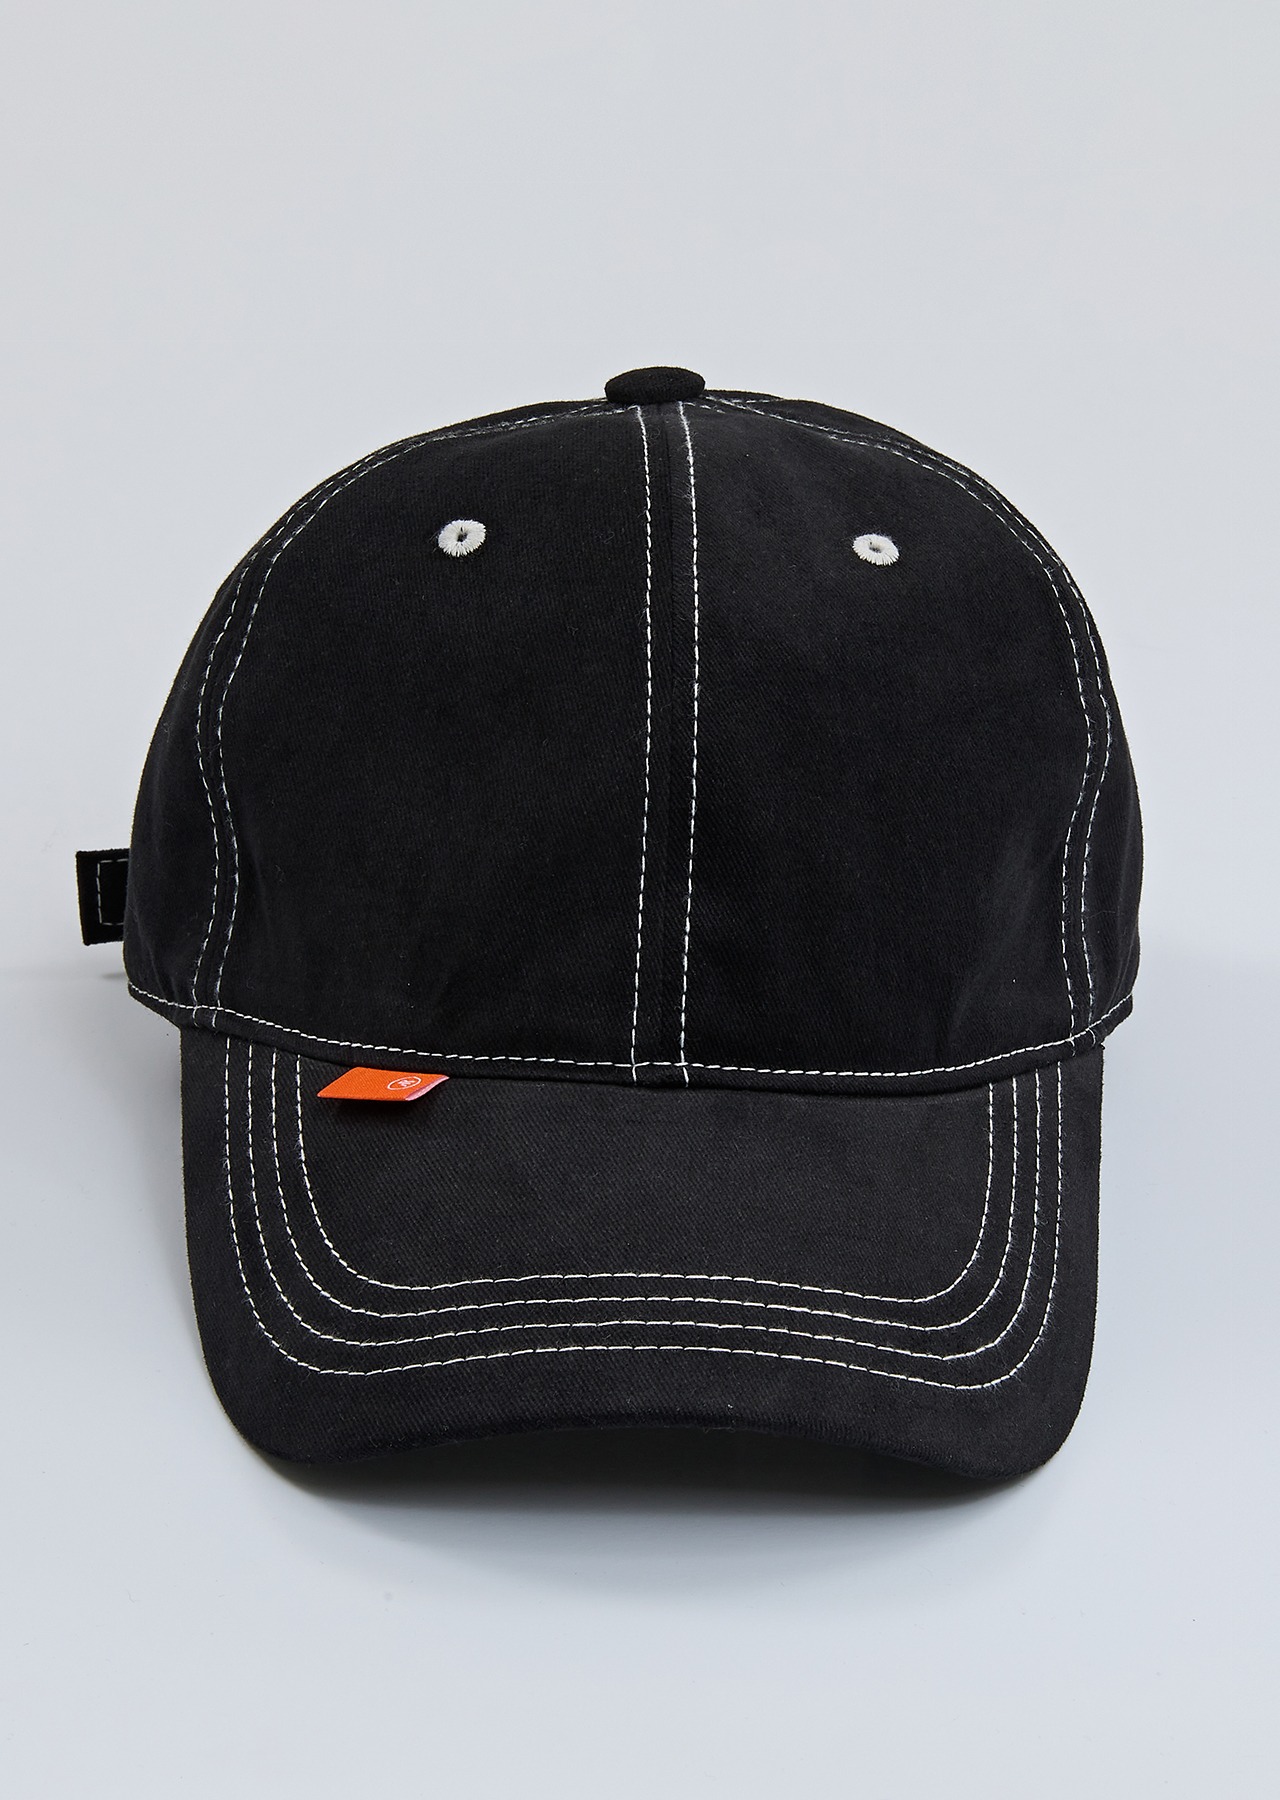 Stitch ball cap (BLACK)